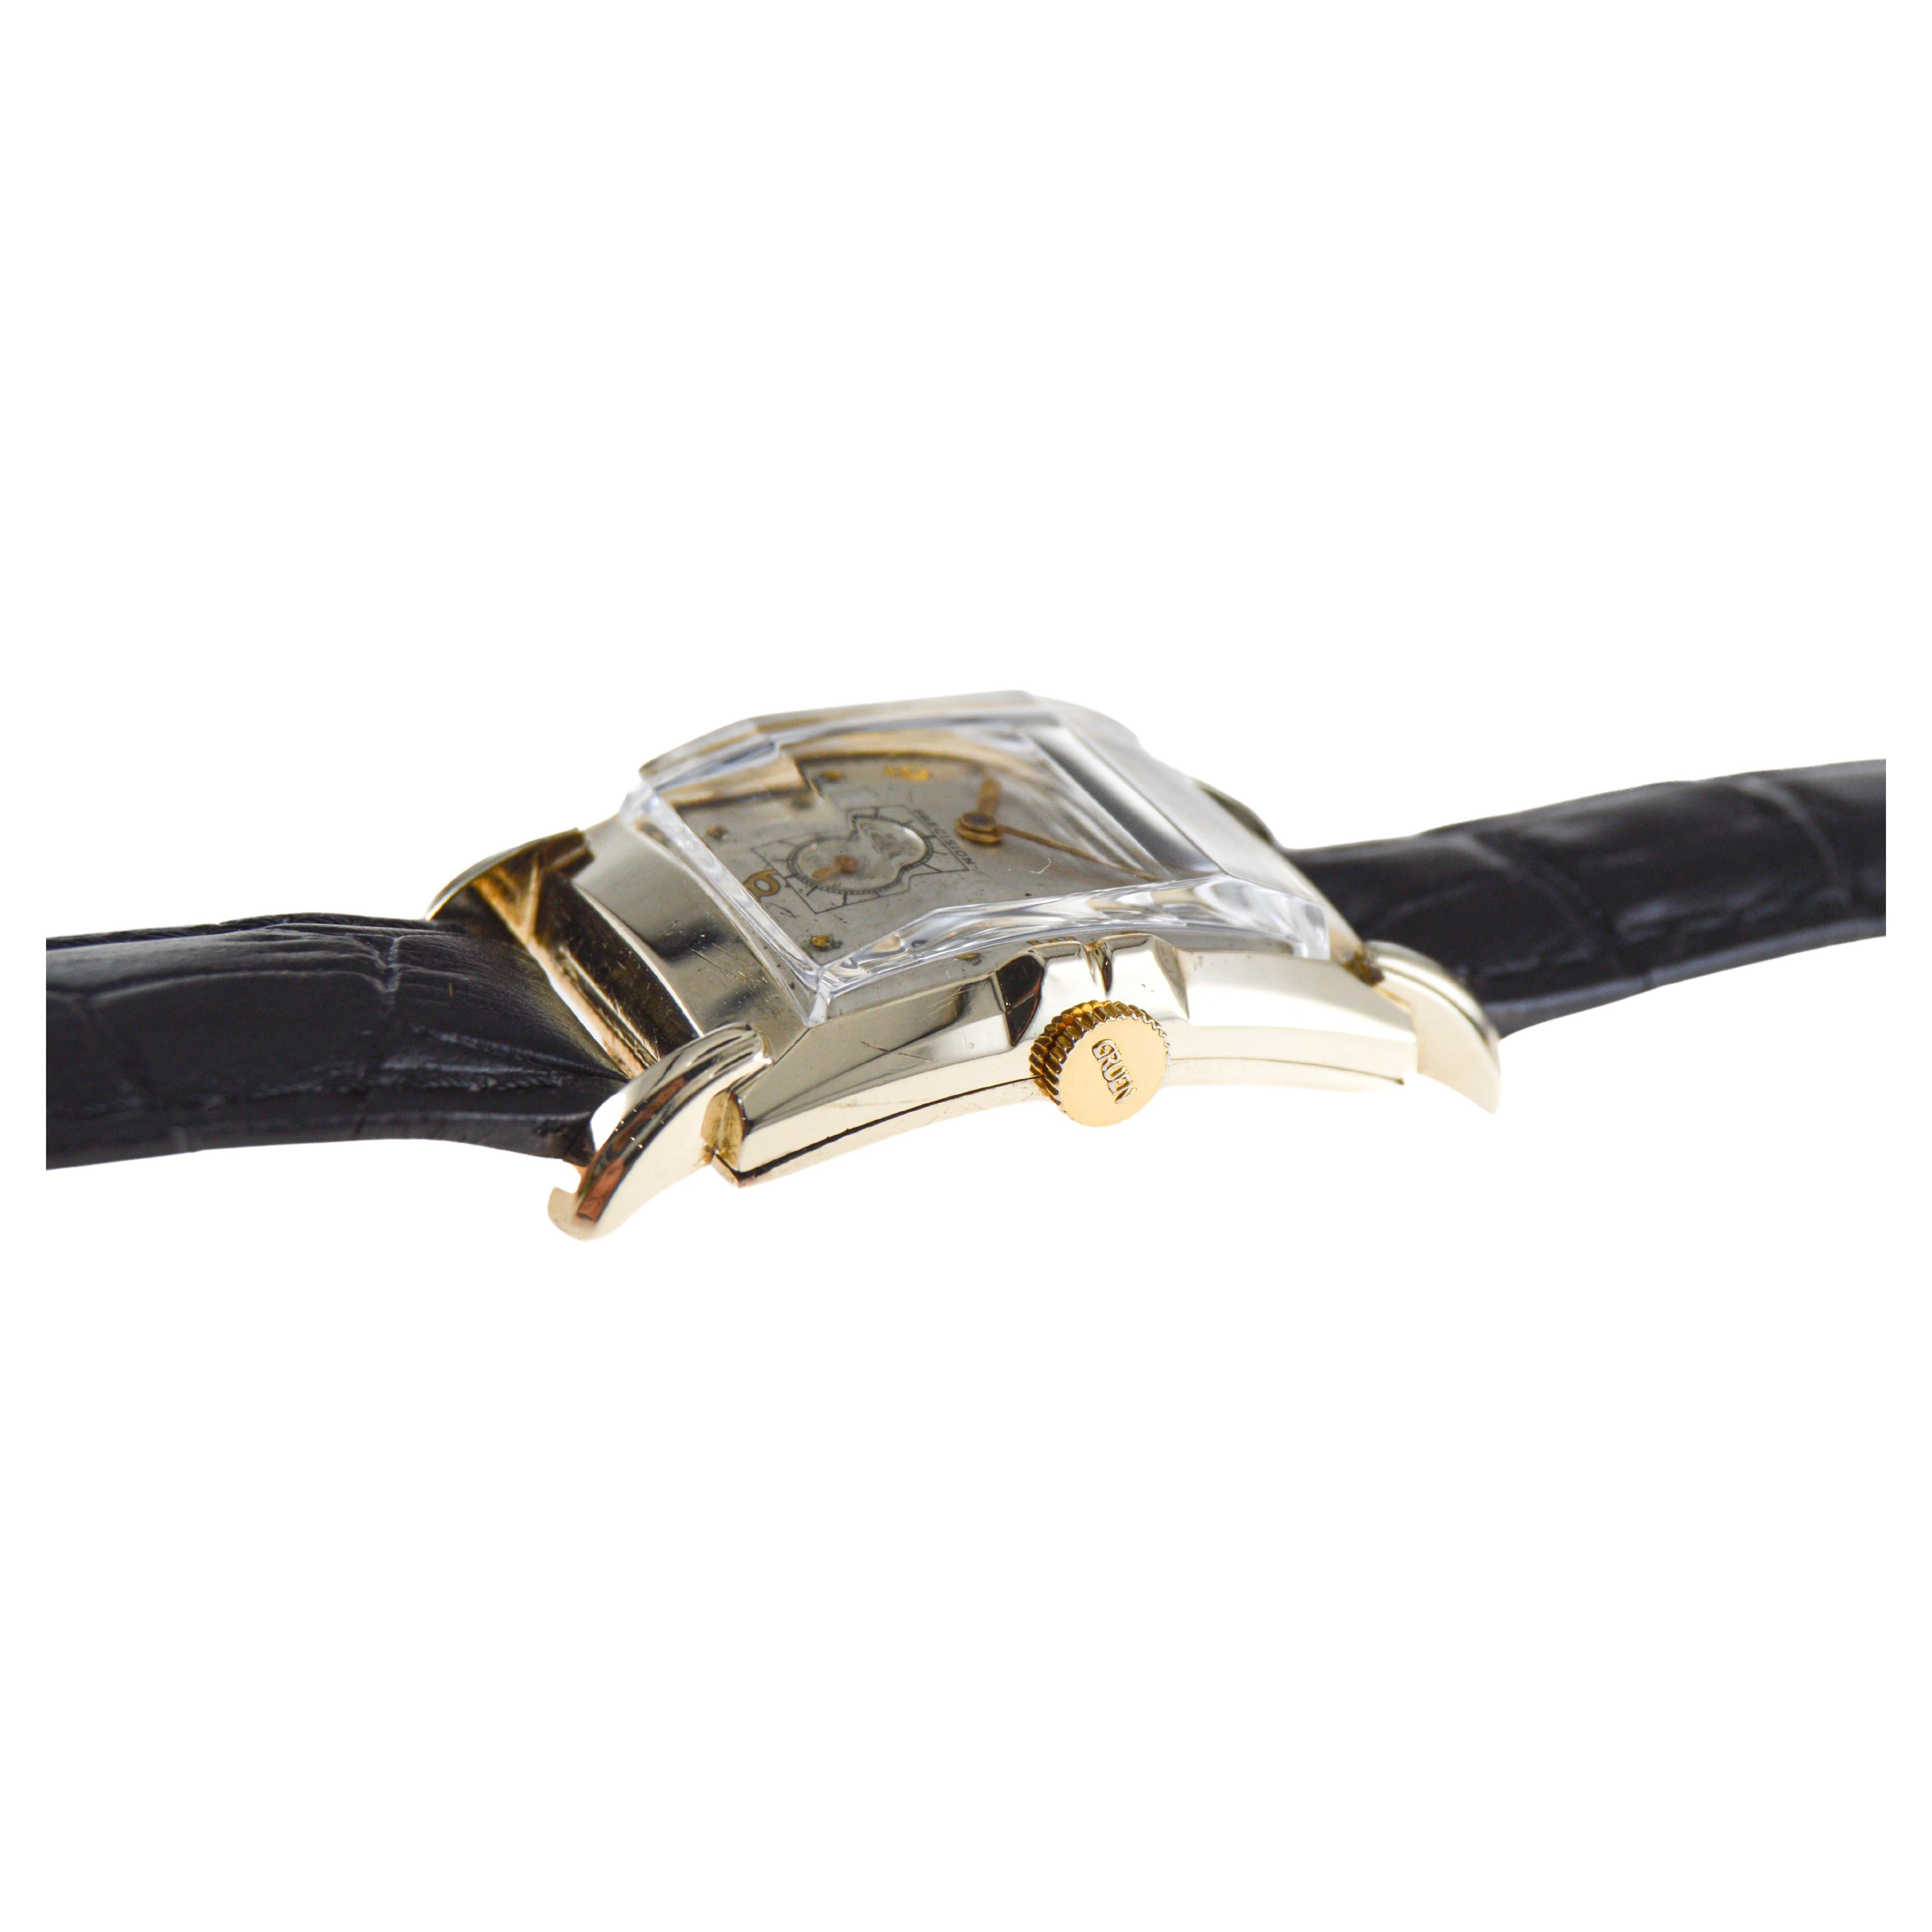 Gruen 10k Gold Filled Art Deco Watch For Sale 4